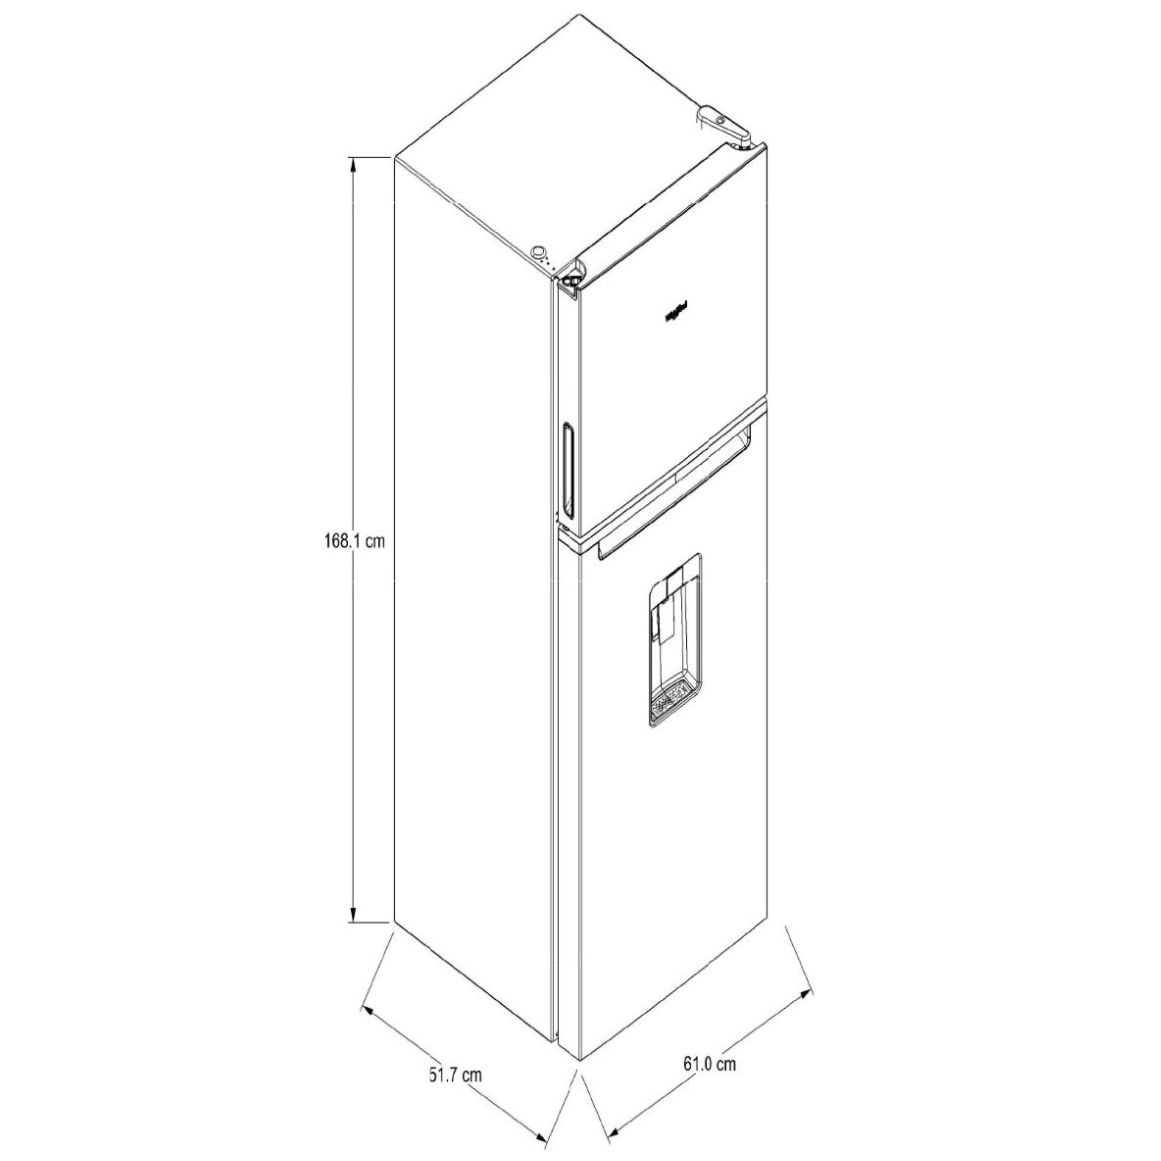 Refrigerador Top Mount 11P3 Xpert Energy Saver con Dispensador Wt1143K